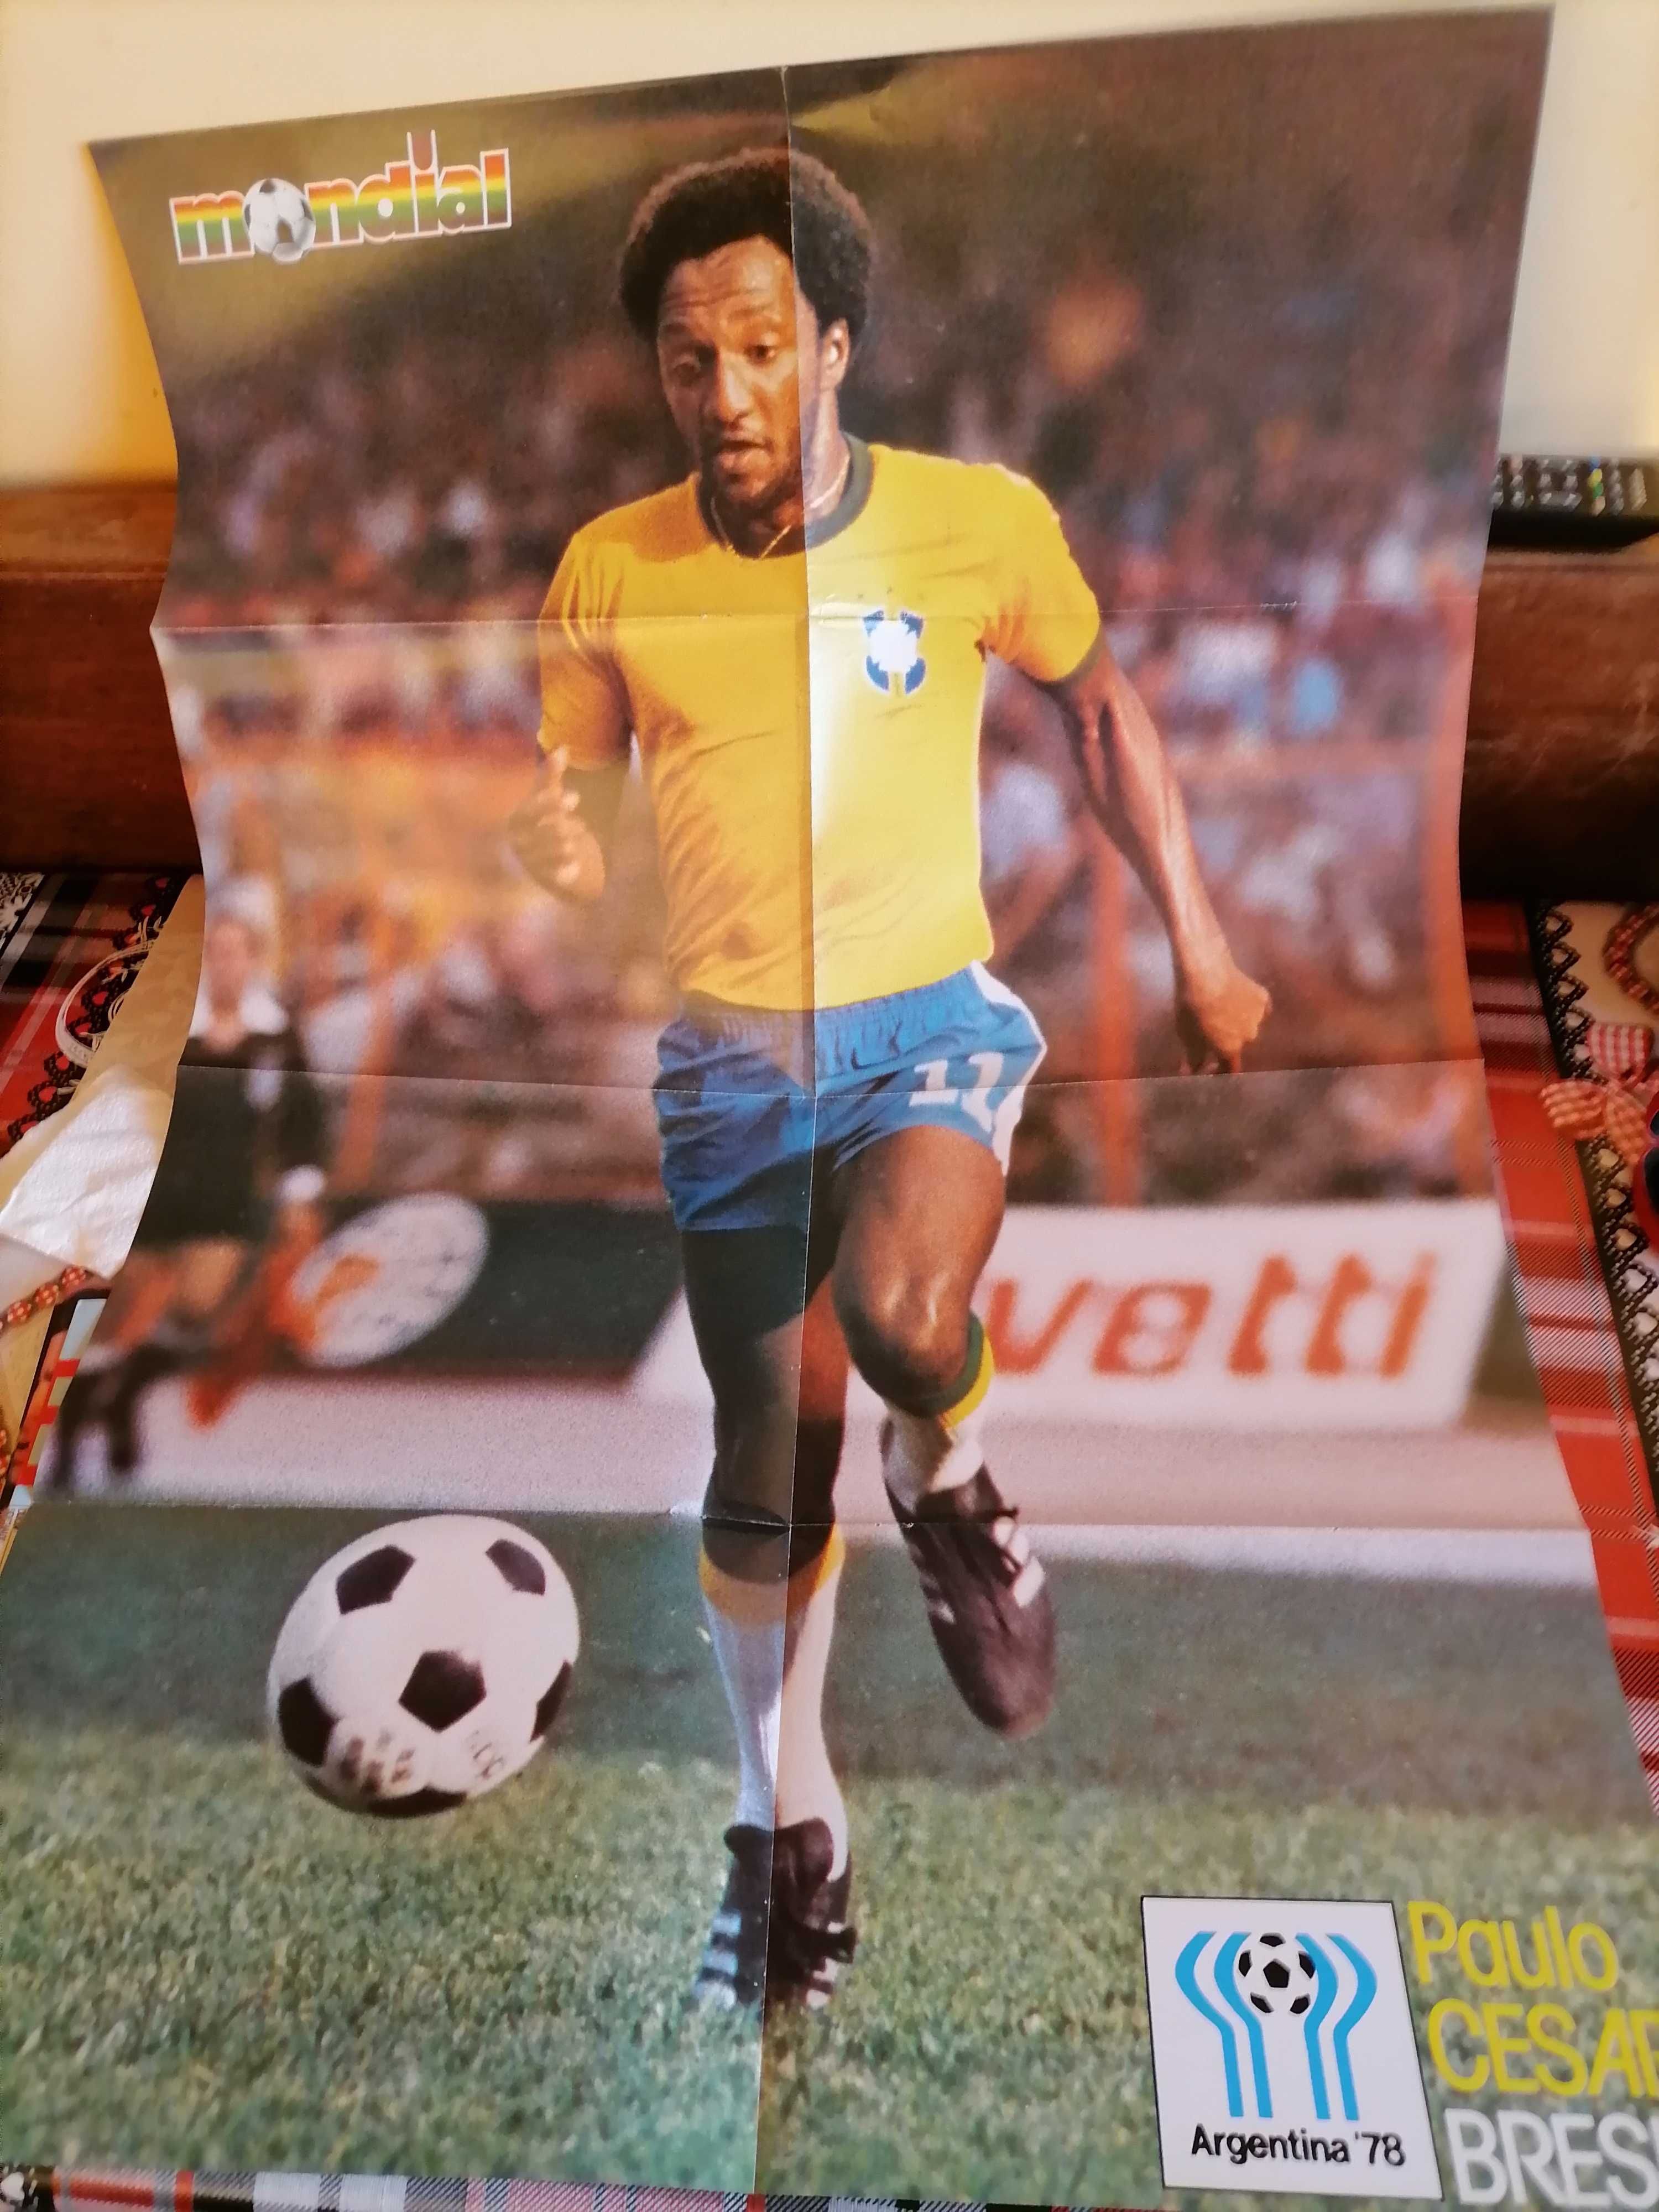 Големи плакати на отбори и футболисти  за колекционери.